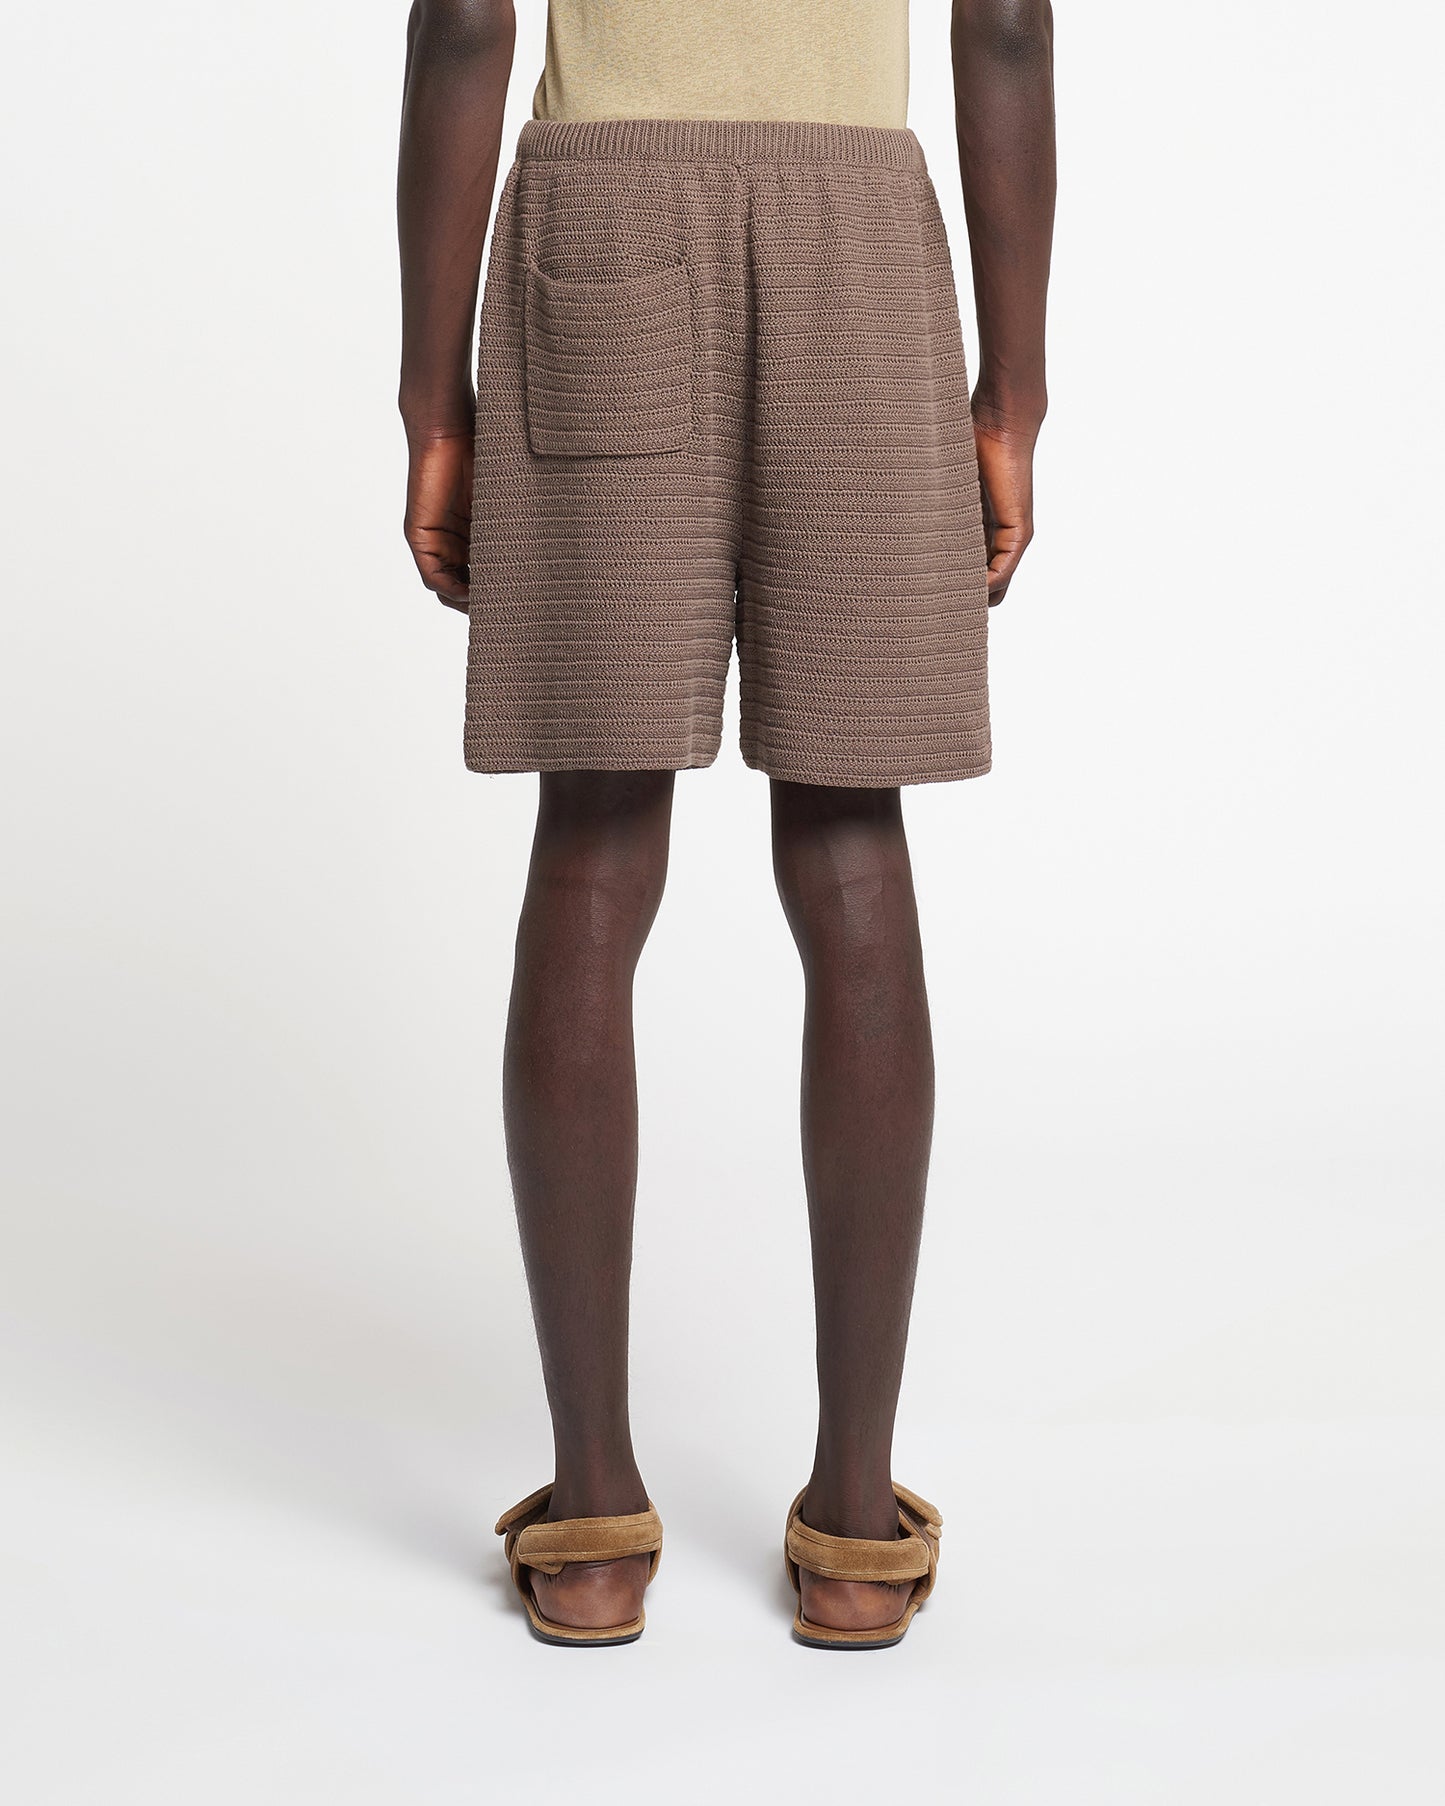 Caden - Linear Crochet Shorts - Fossil Brown